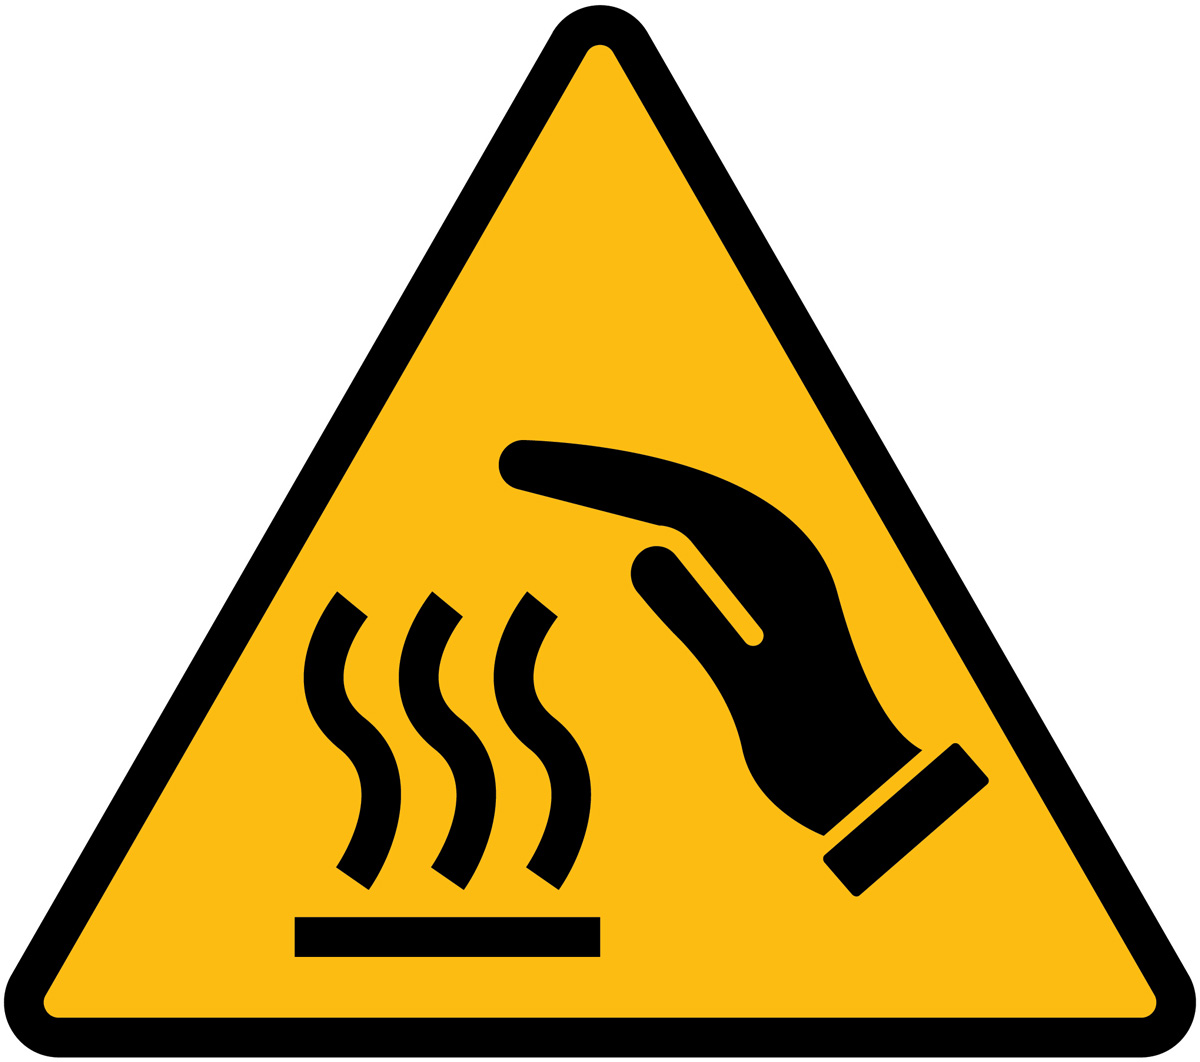 Contact burn warning sign illustration